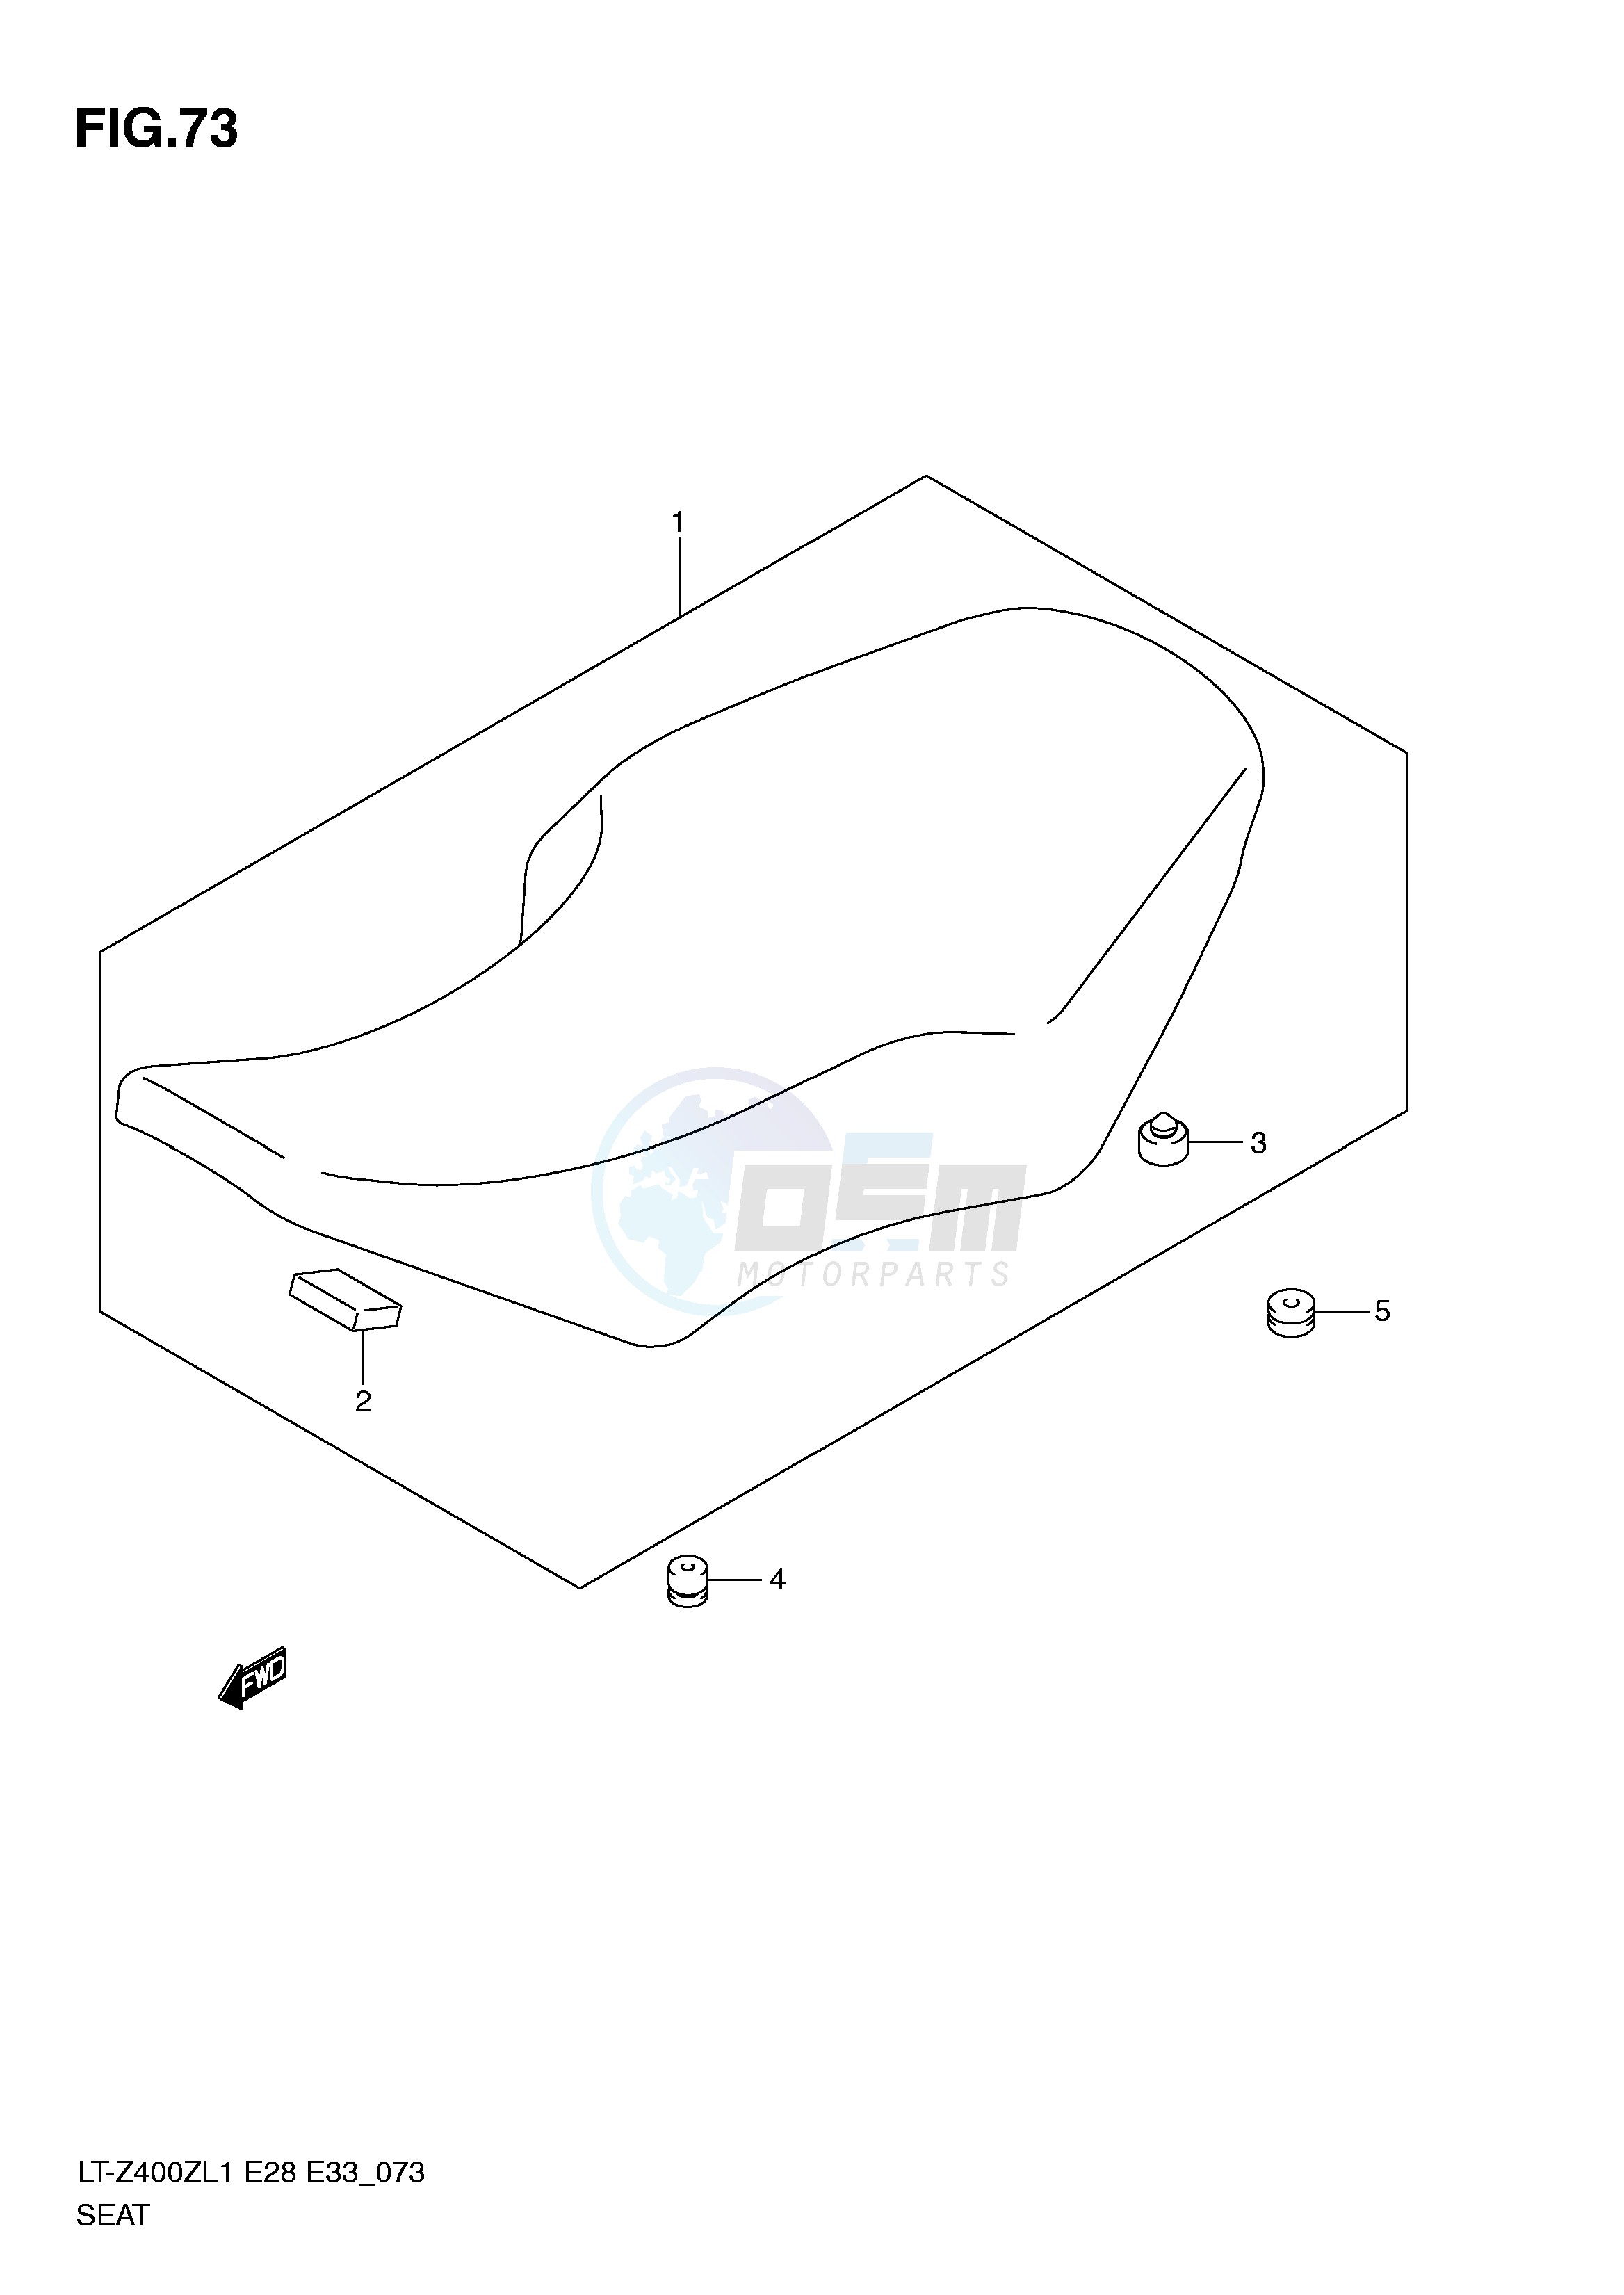 SEAT (LT-Z400L1 E33) blueprint